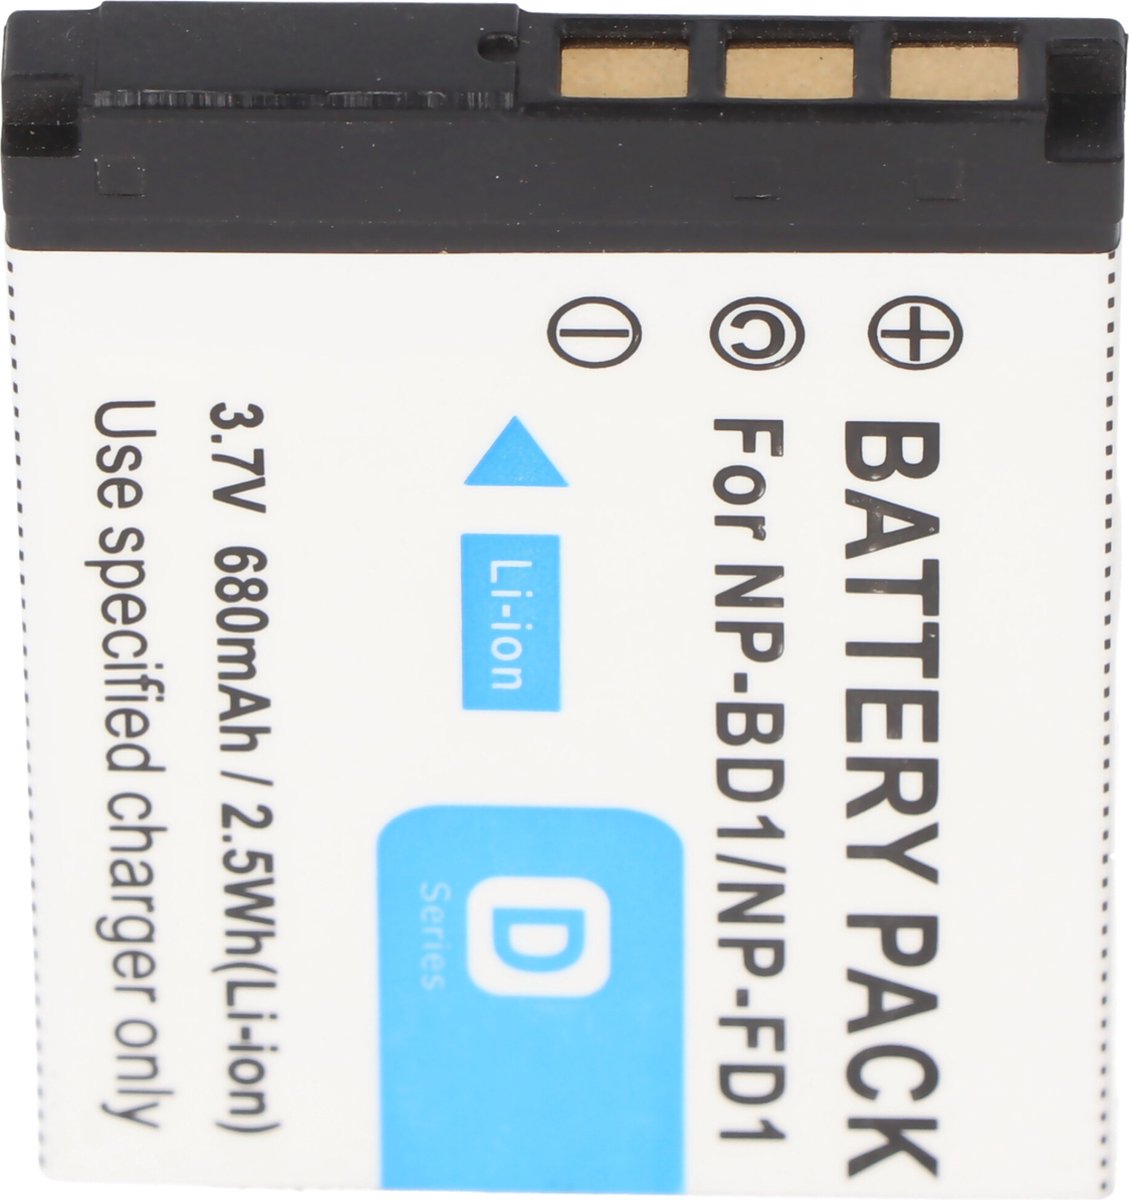 AccuCell-batterij geschikt voor Sony NP-BD1, DSC-T2, T200, T70, T75